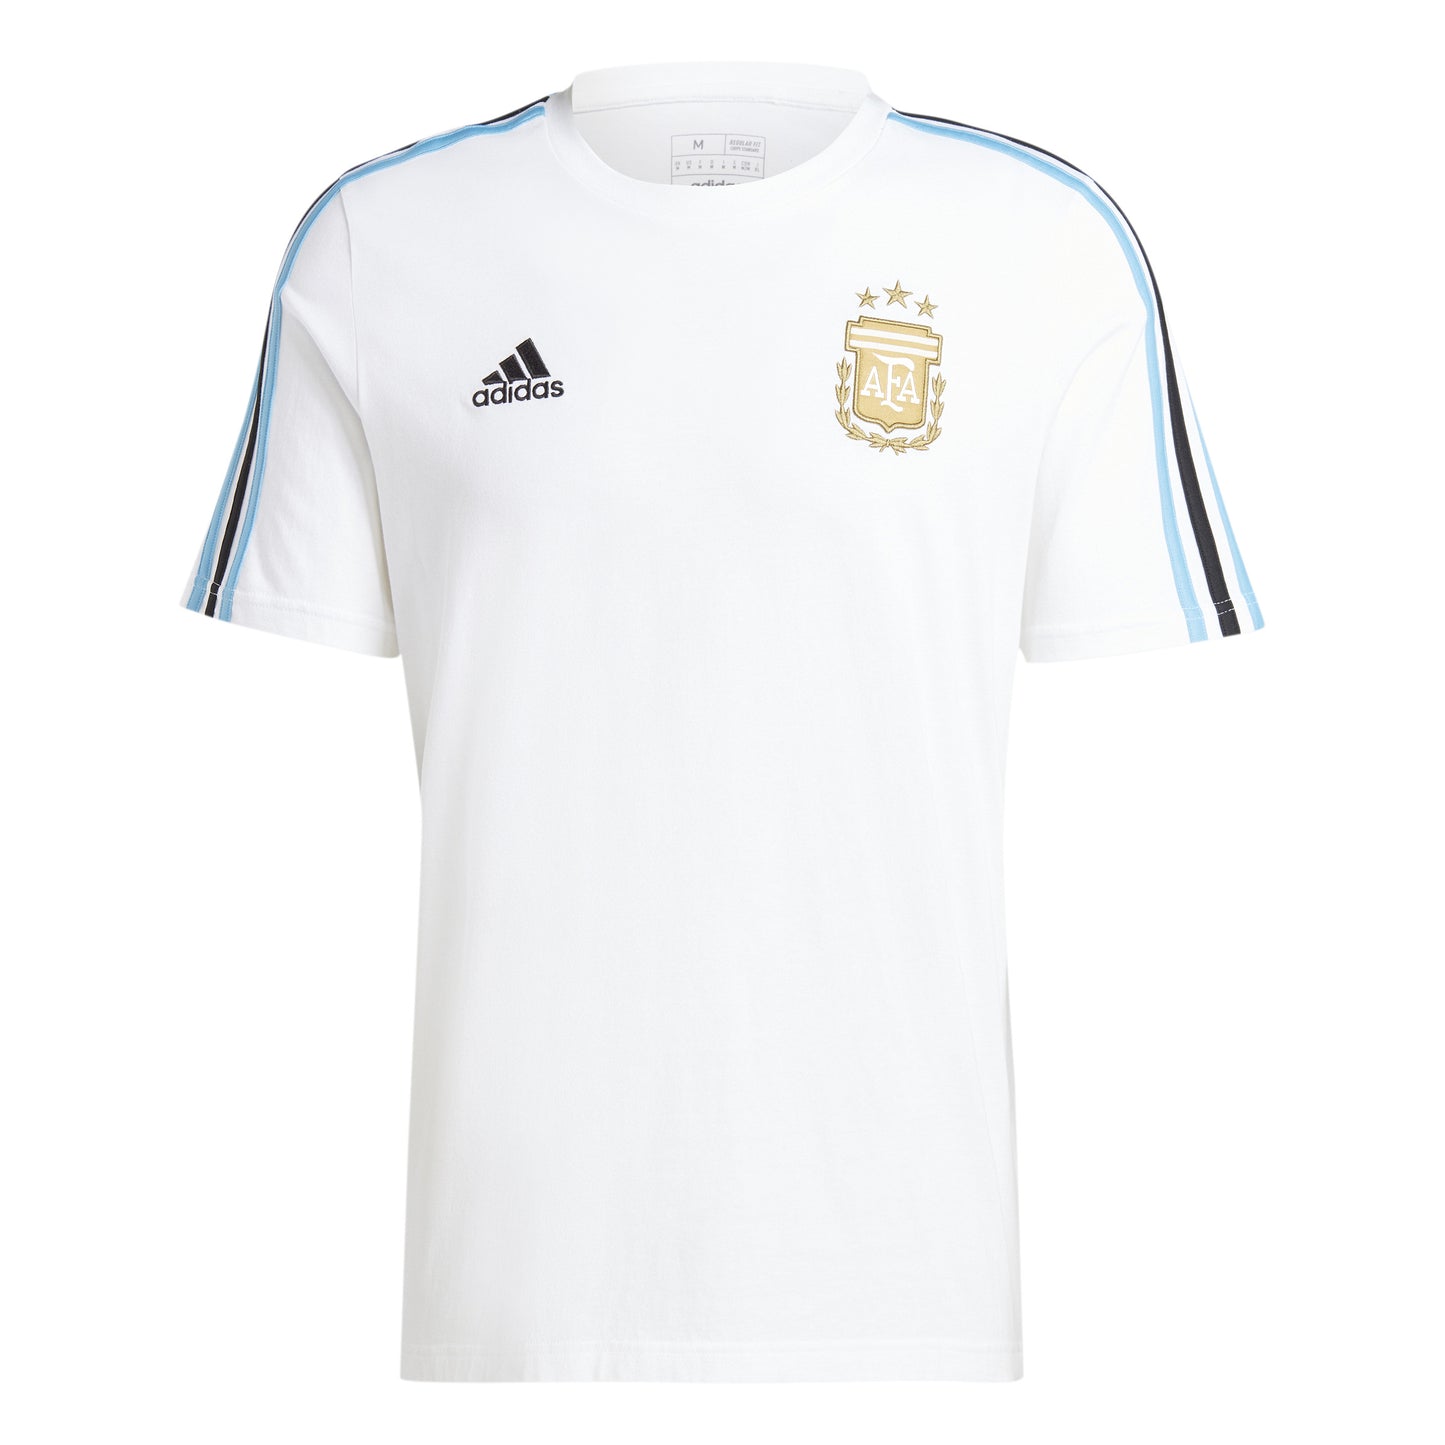 adidas Mens's AFA Argentina DNA T-Shirt Tee